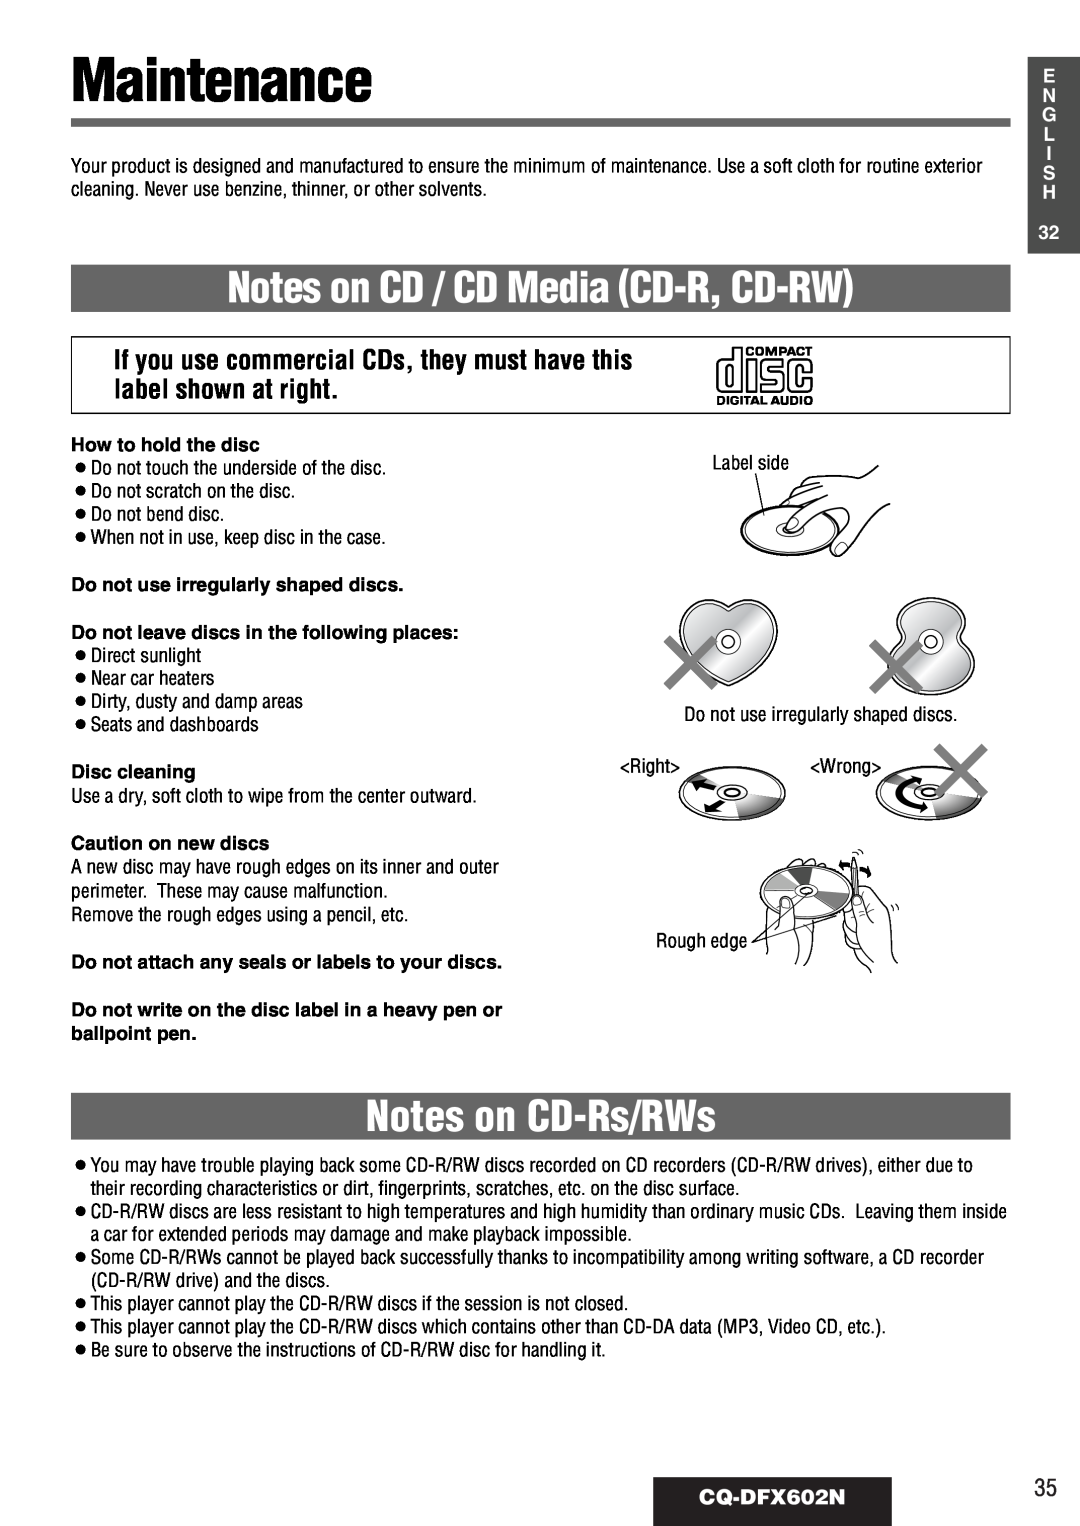 Panasonic manual Maintenance, Notes on CD-Rs/RWs, CQ-DFX602N35, E N G L I S H, Notes on CD / CD Media CD-R, CD-RW 